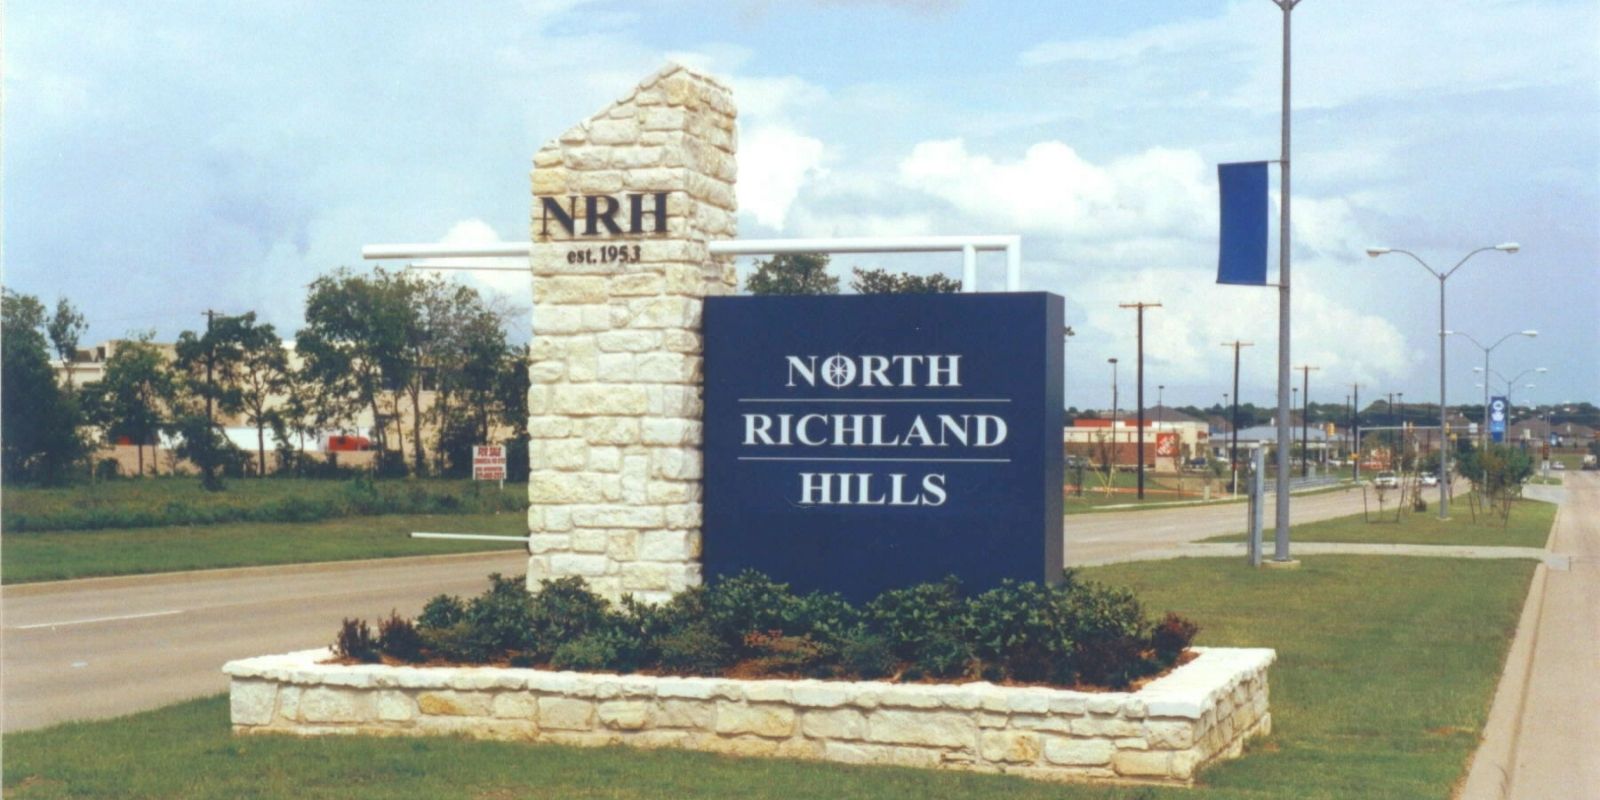 6. North Richland Hills